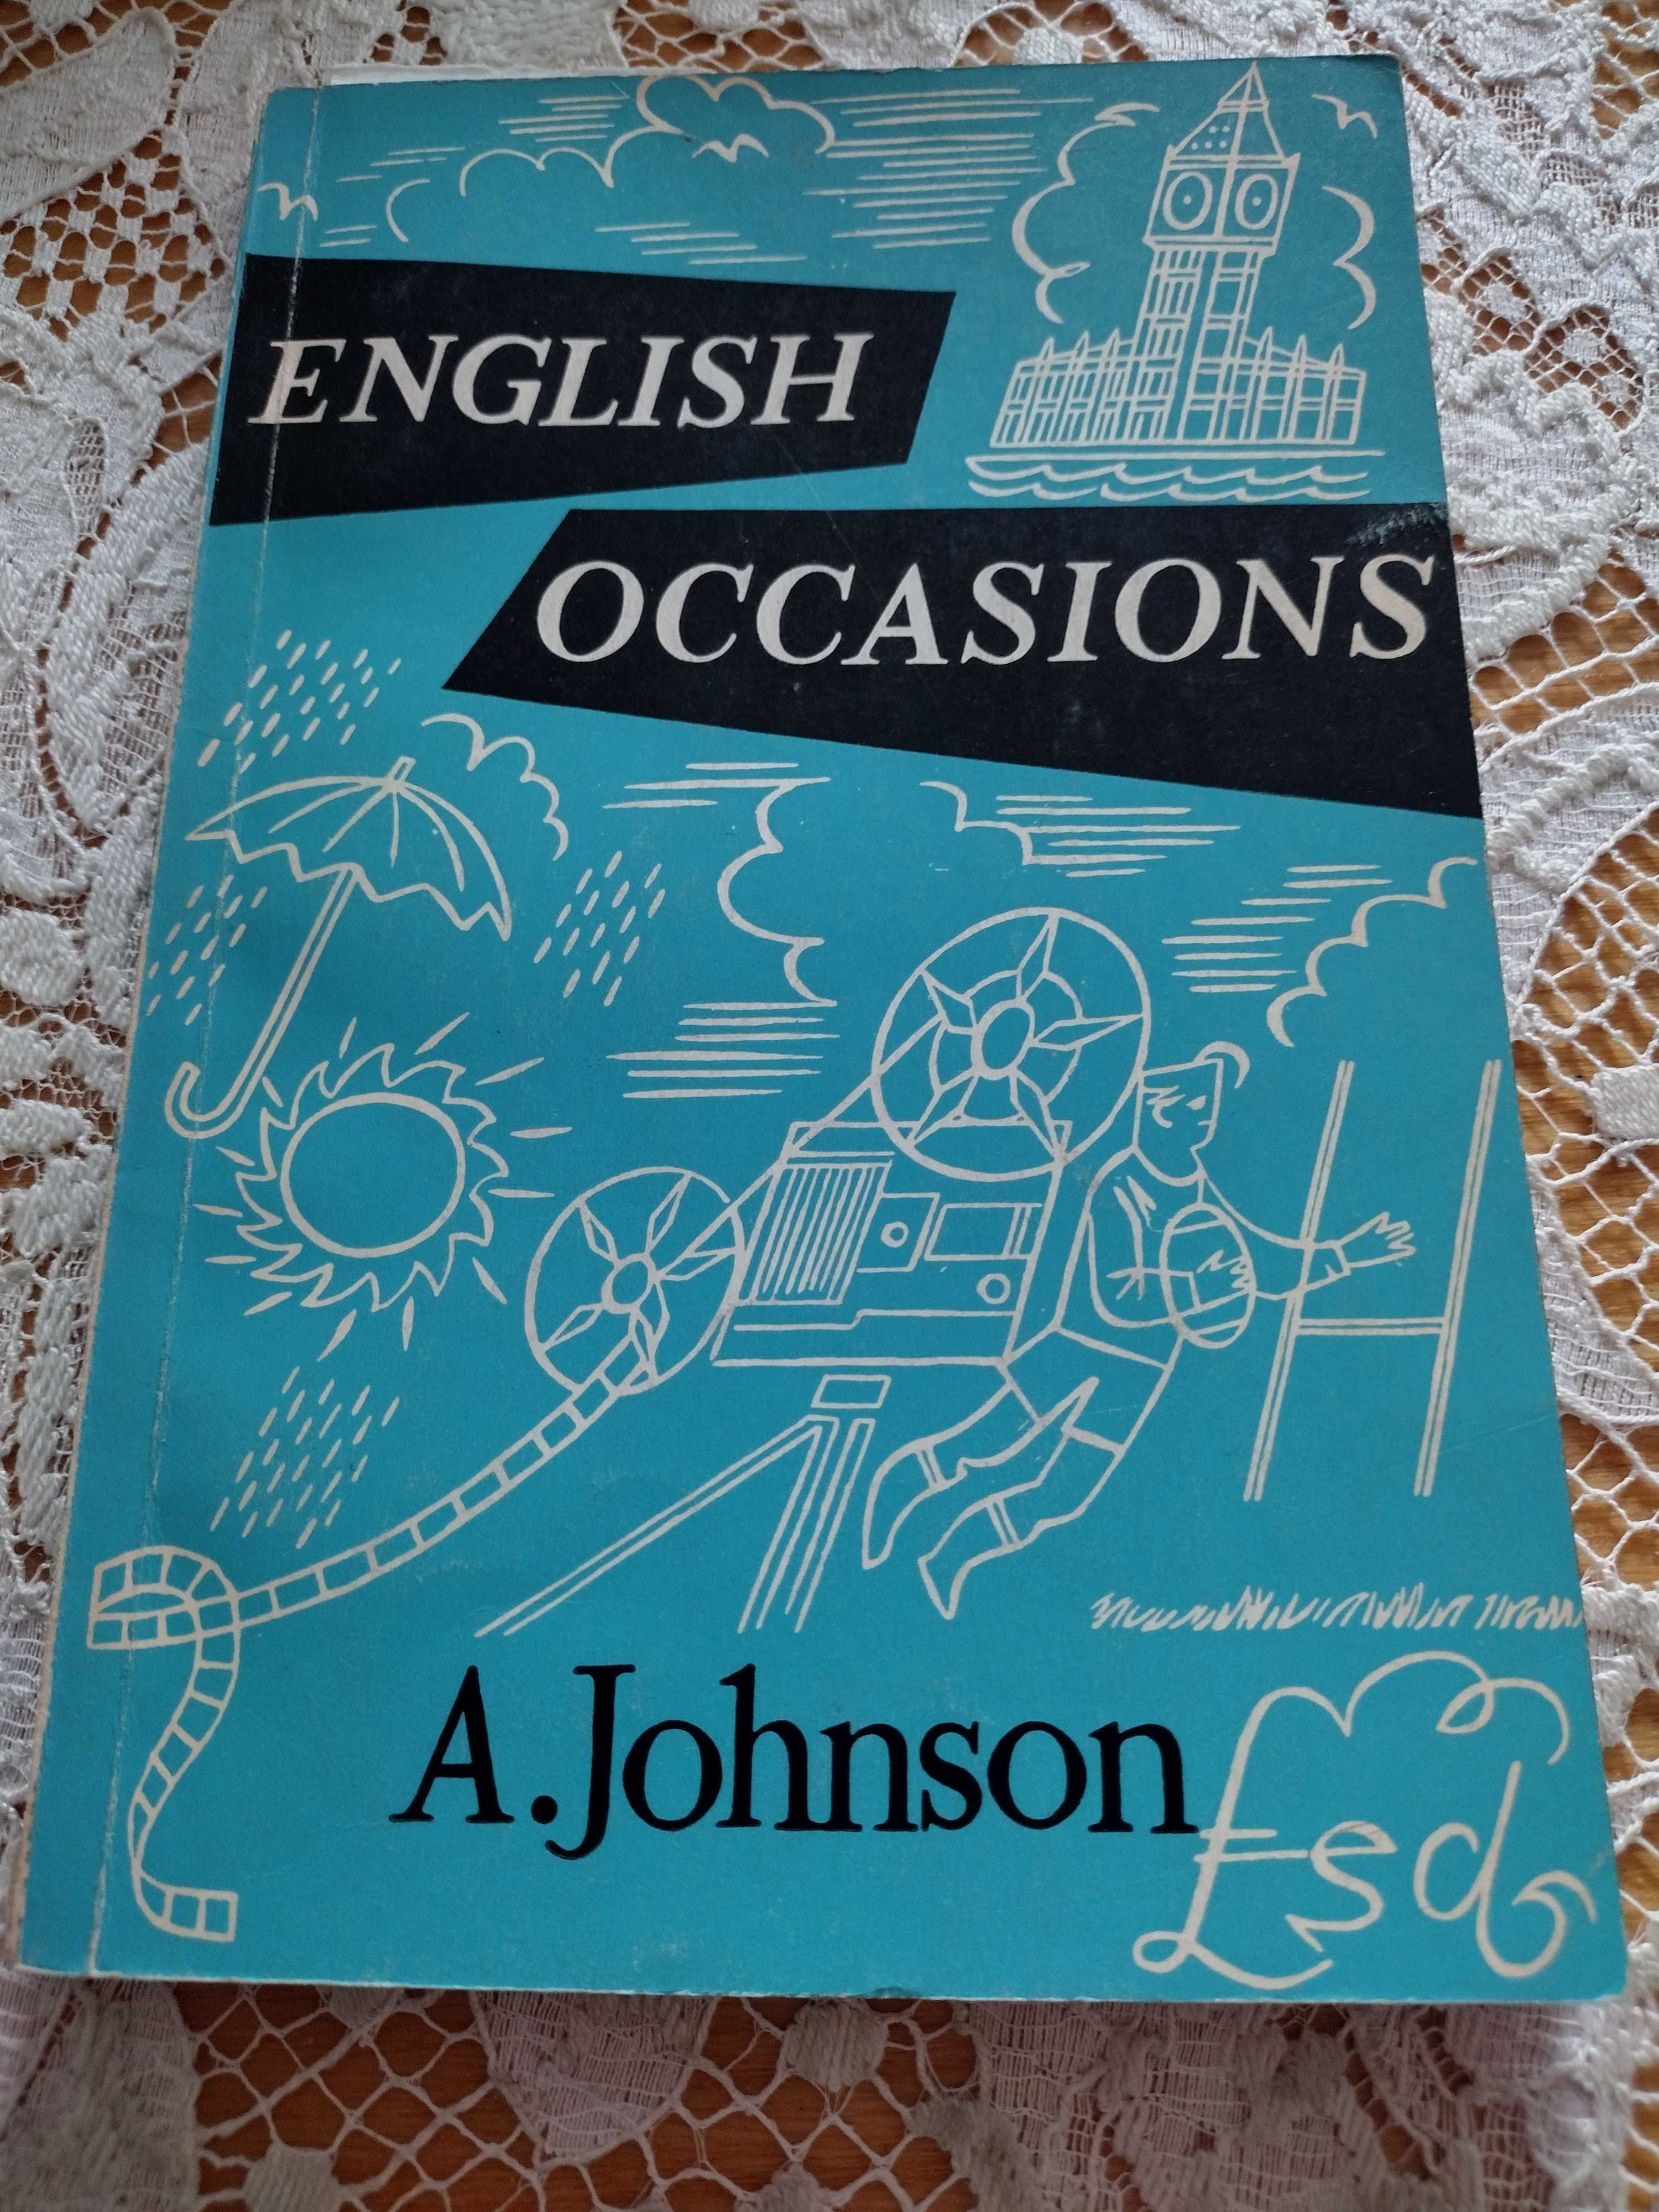 "English occasions" A. Johnson